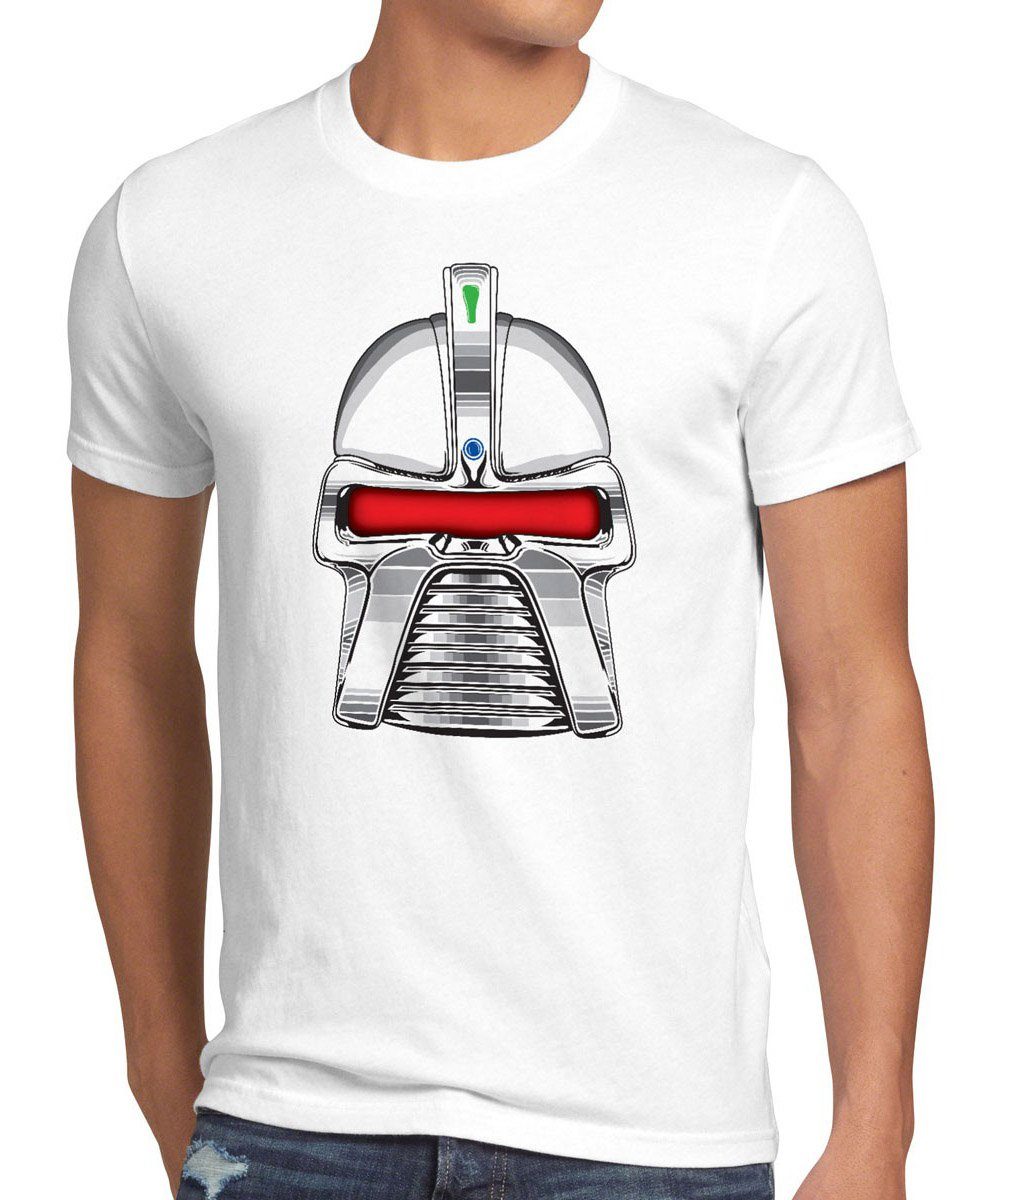 cooper theory trooper Print-Shirt Sheldon wars weiß style3 Herren T-Shirt Zylon bang Big star galactica